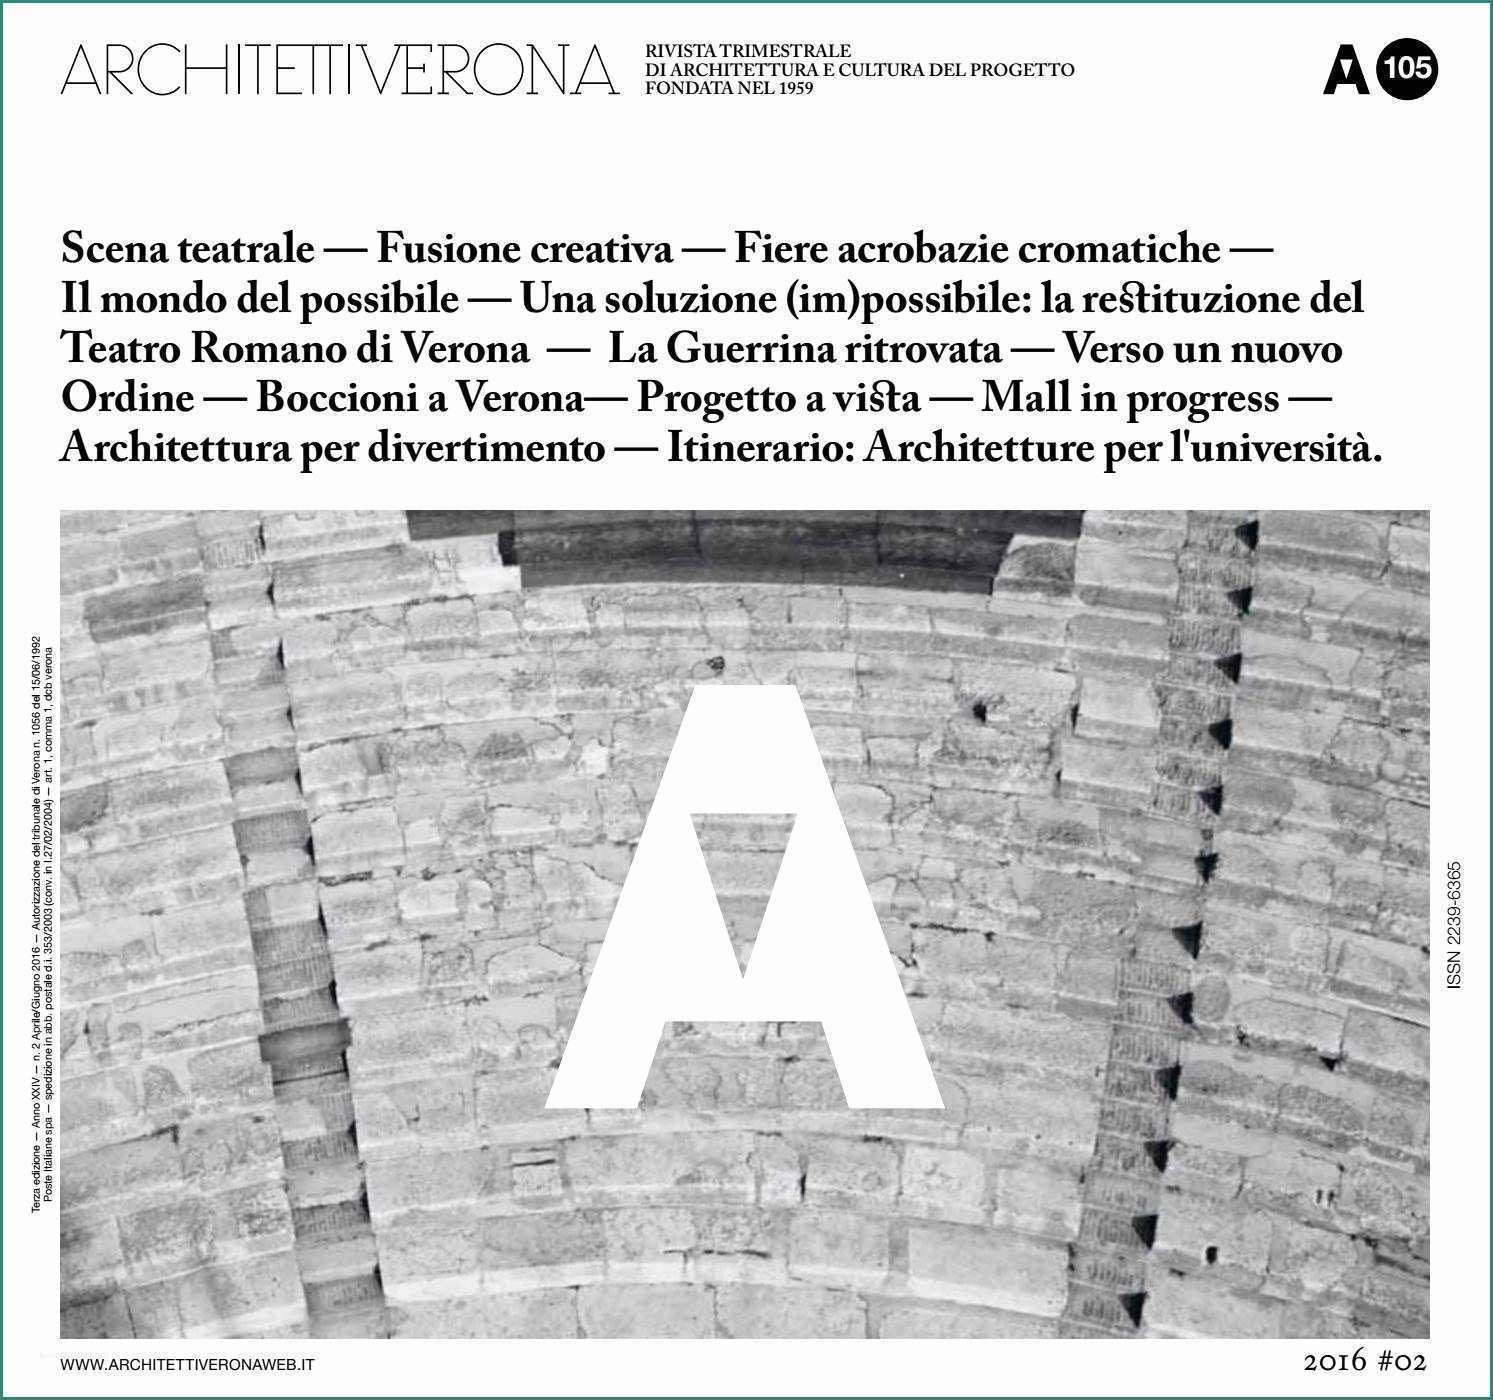 Simboli Idraulici Dwg E Architettiverona 105 by Architettiverona issuu